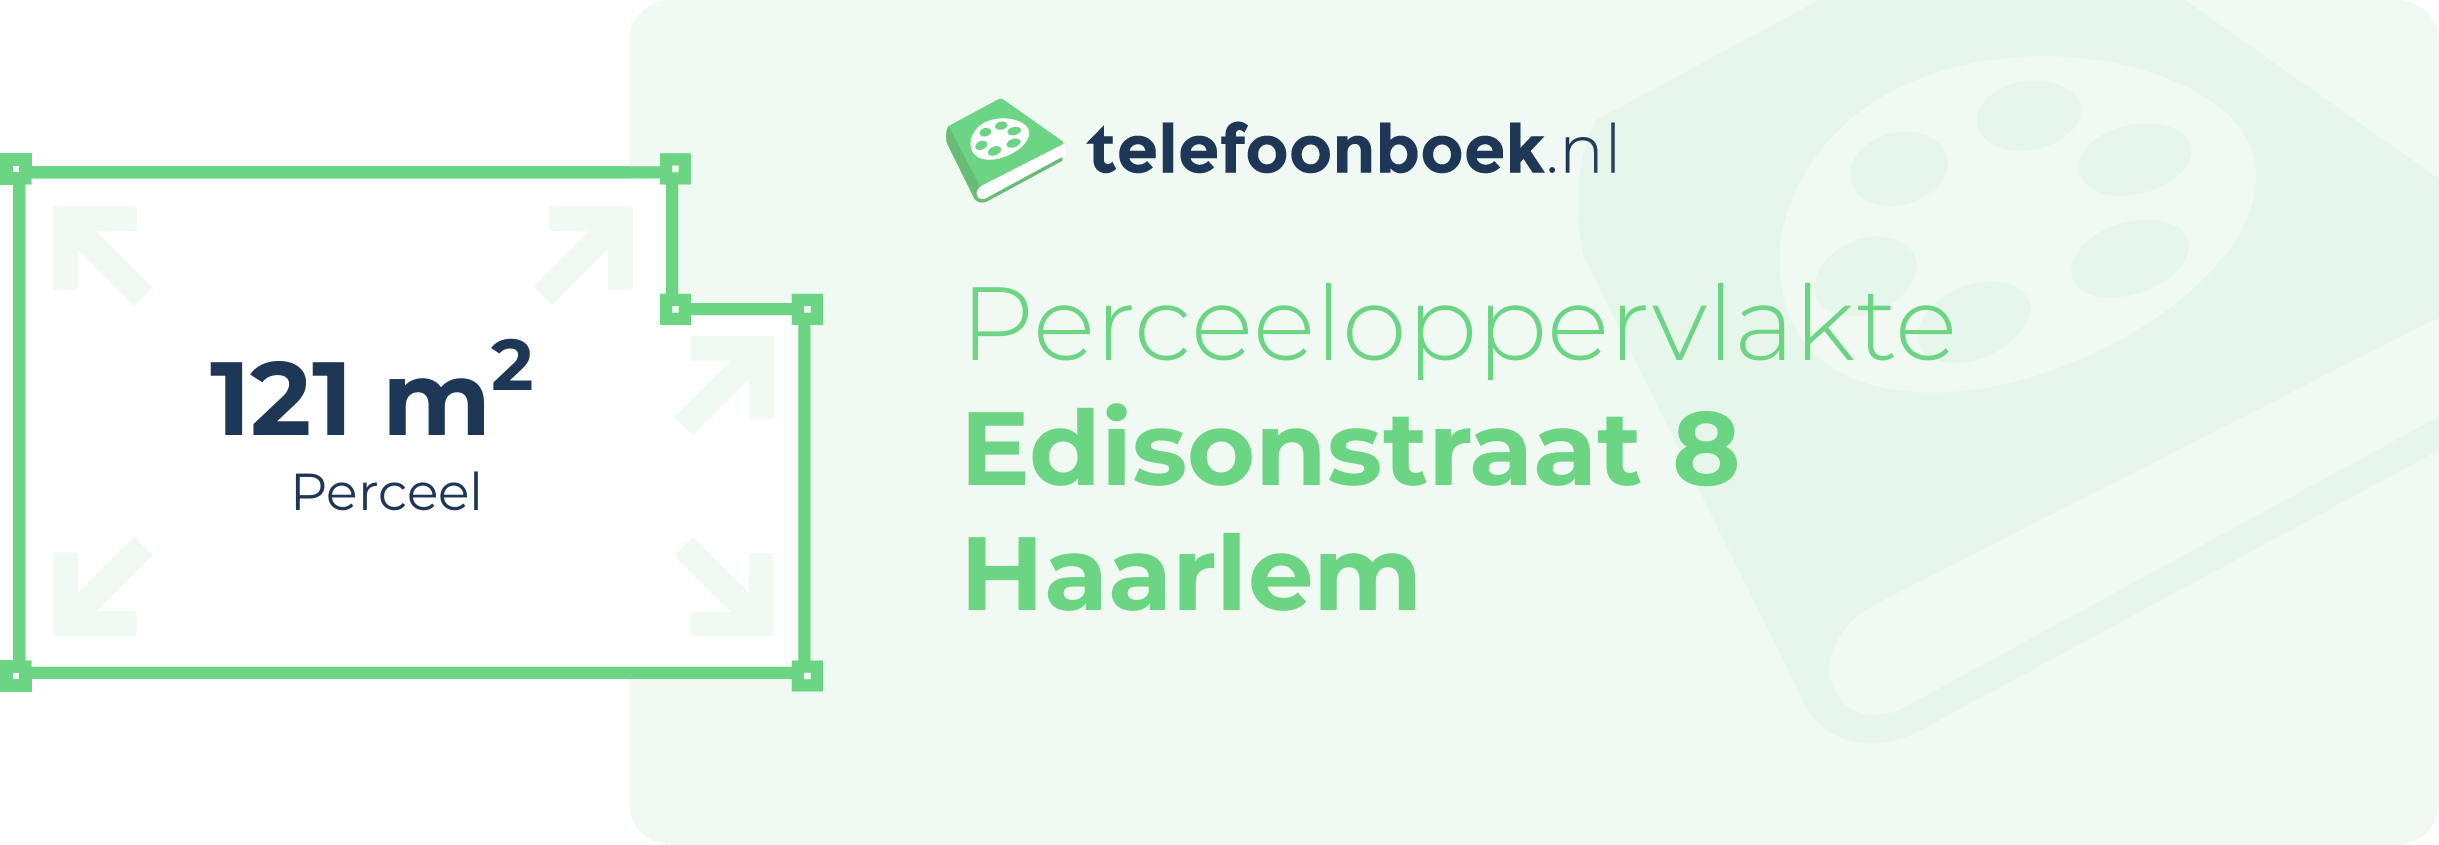 Perceeloppervlakte Edisonstraat 8 Haarlem